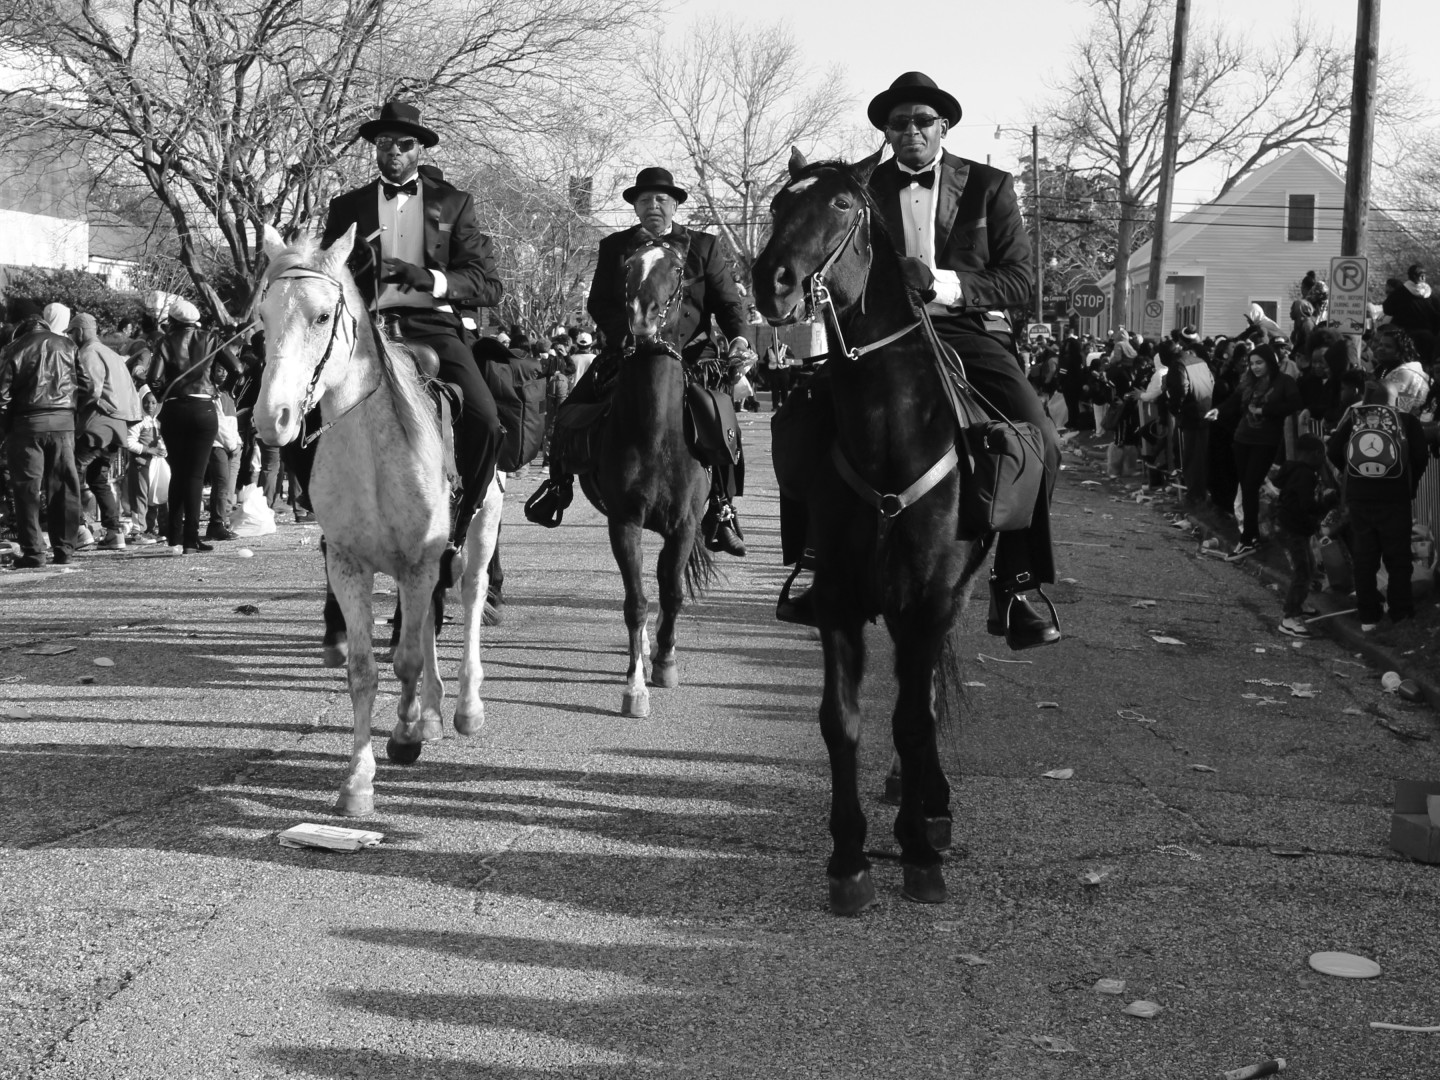 Mardi Gras Horsemen by Steve Joynt